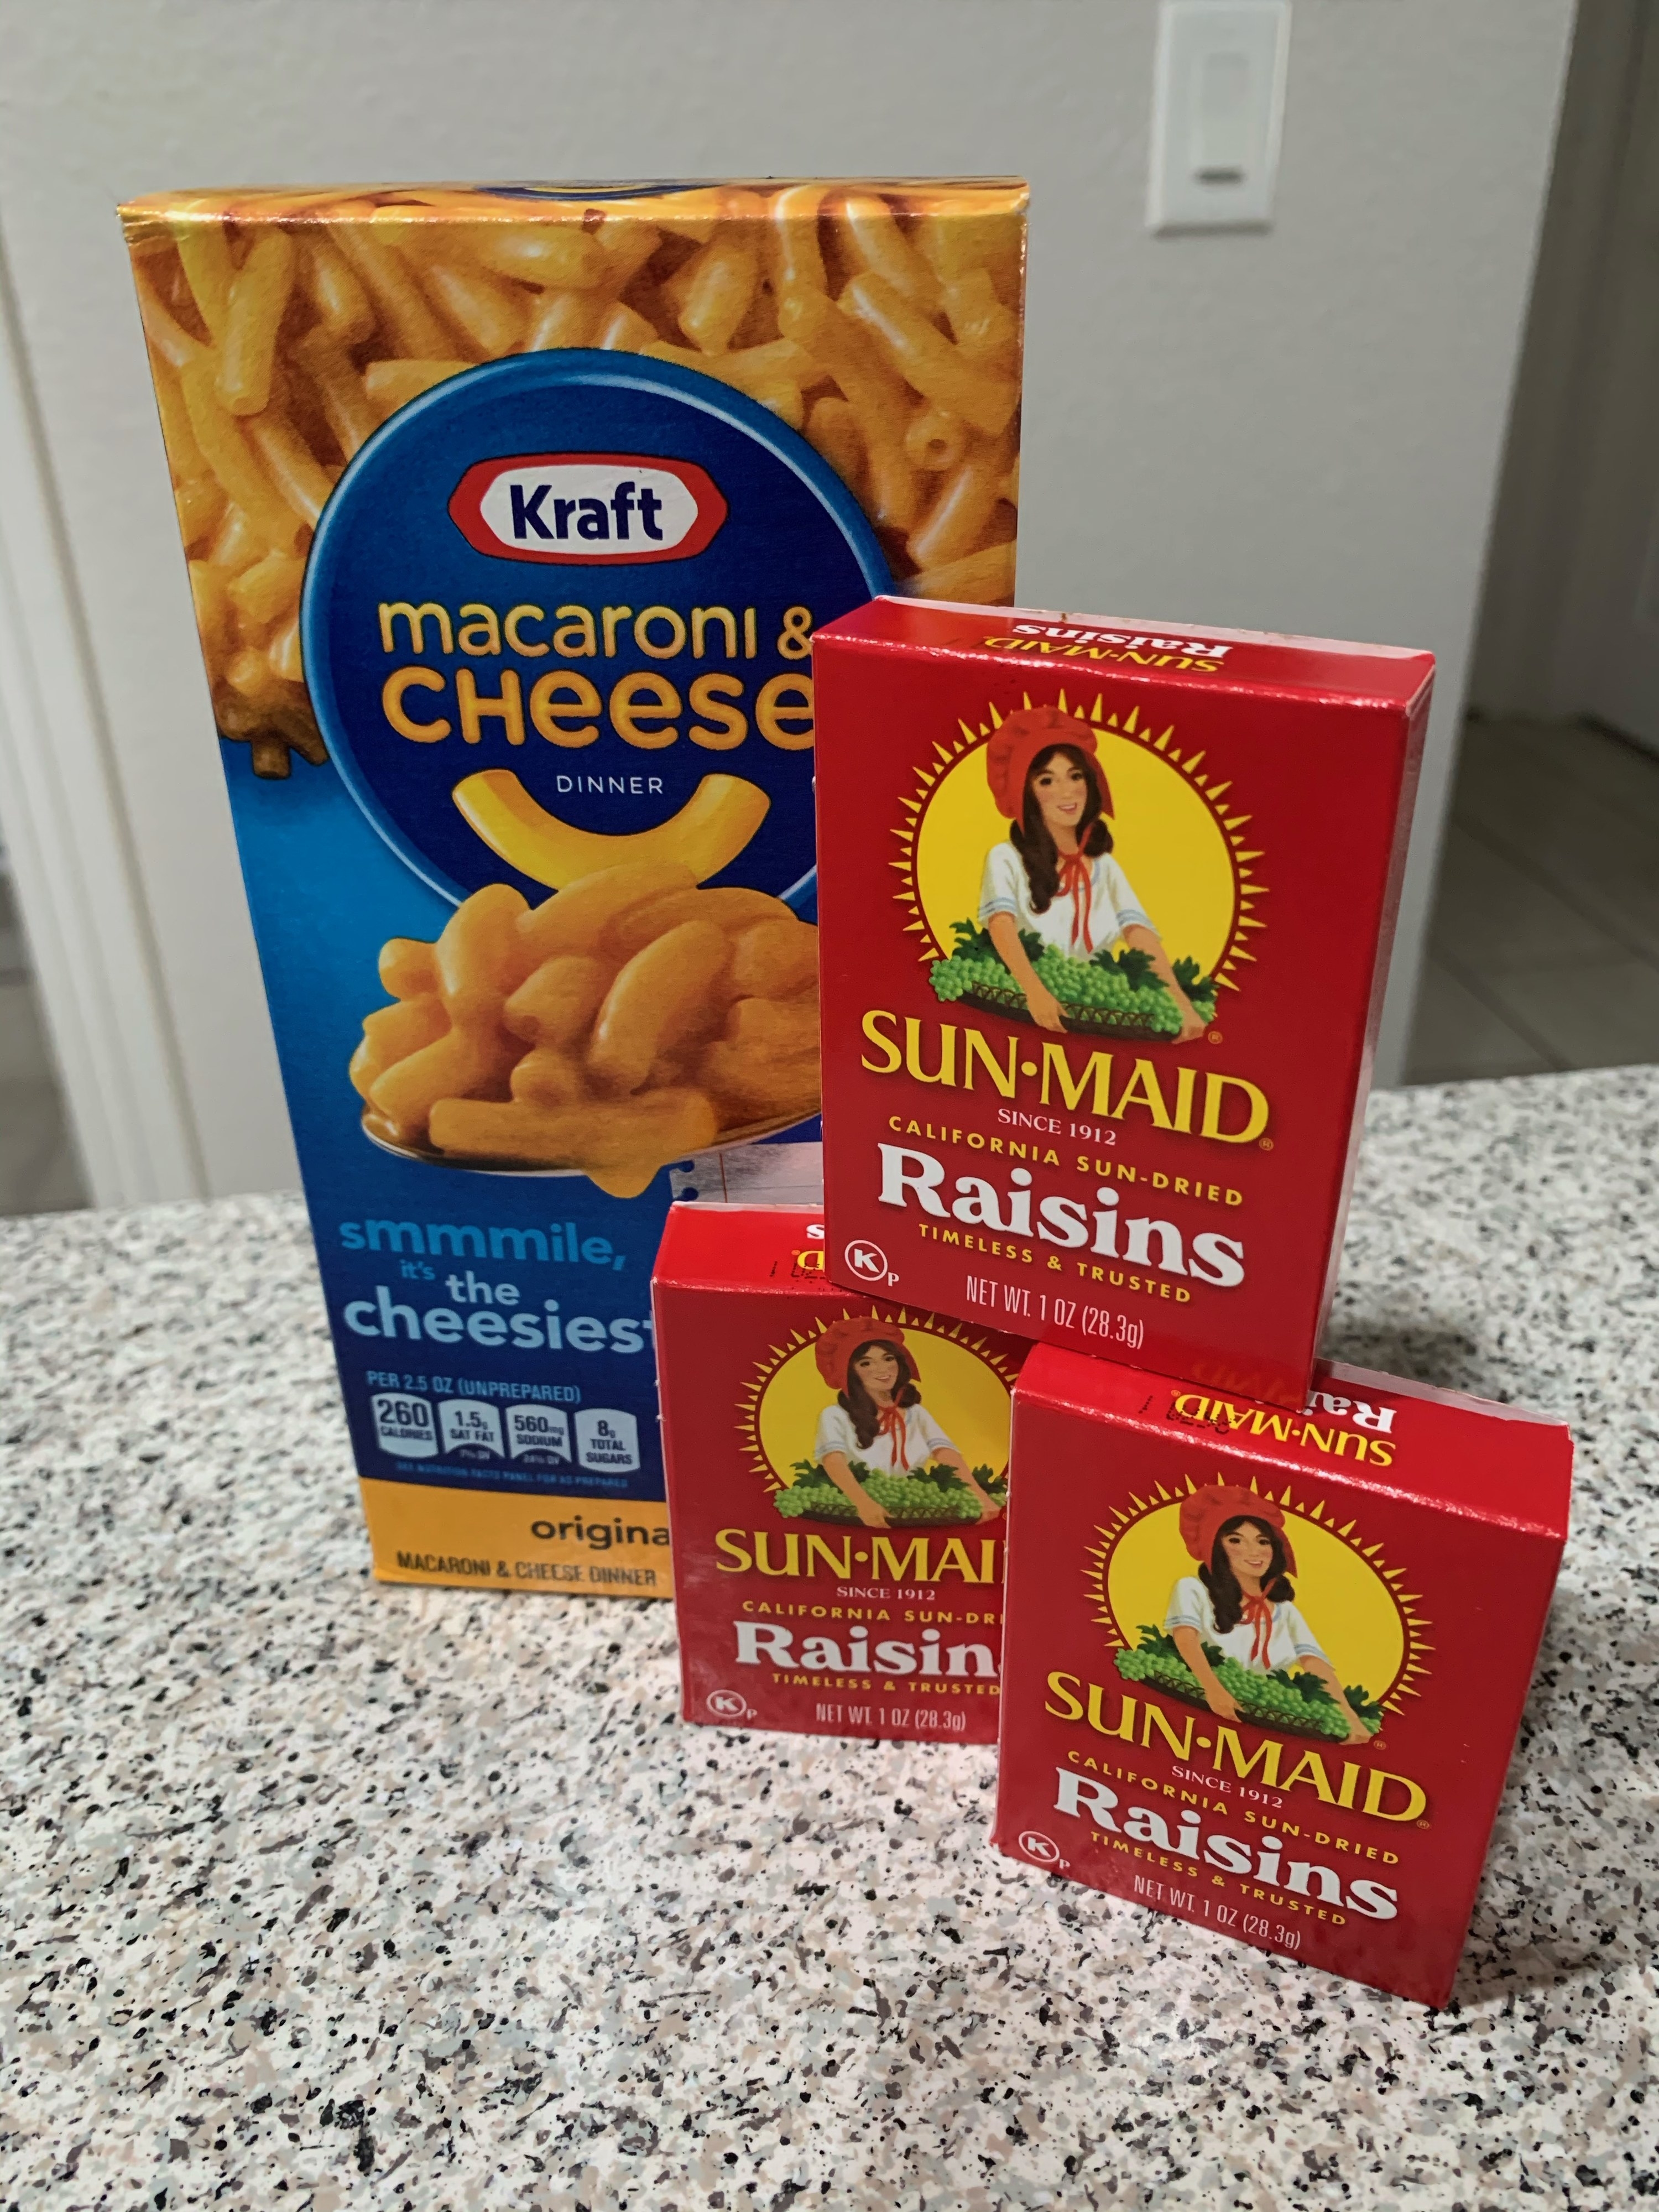 A box of Kraft Macaroni &amp;amp; Cheese and three Sun-Maid Raisins